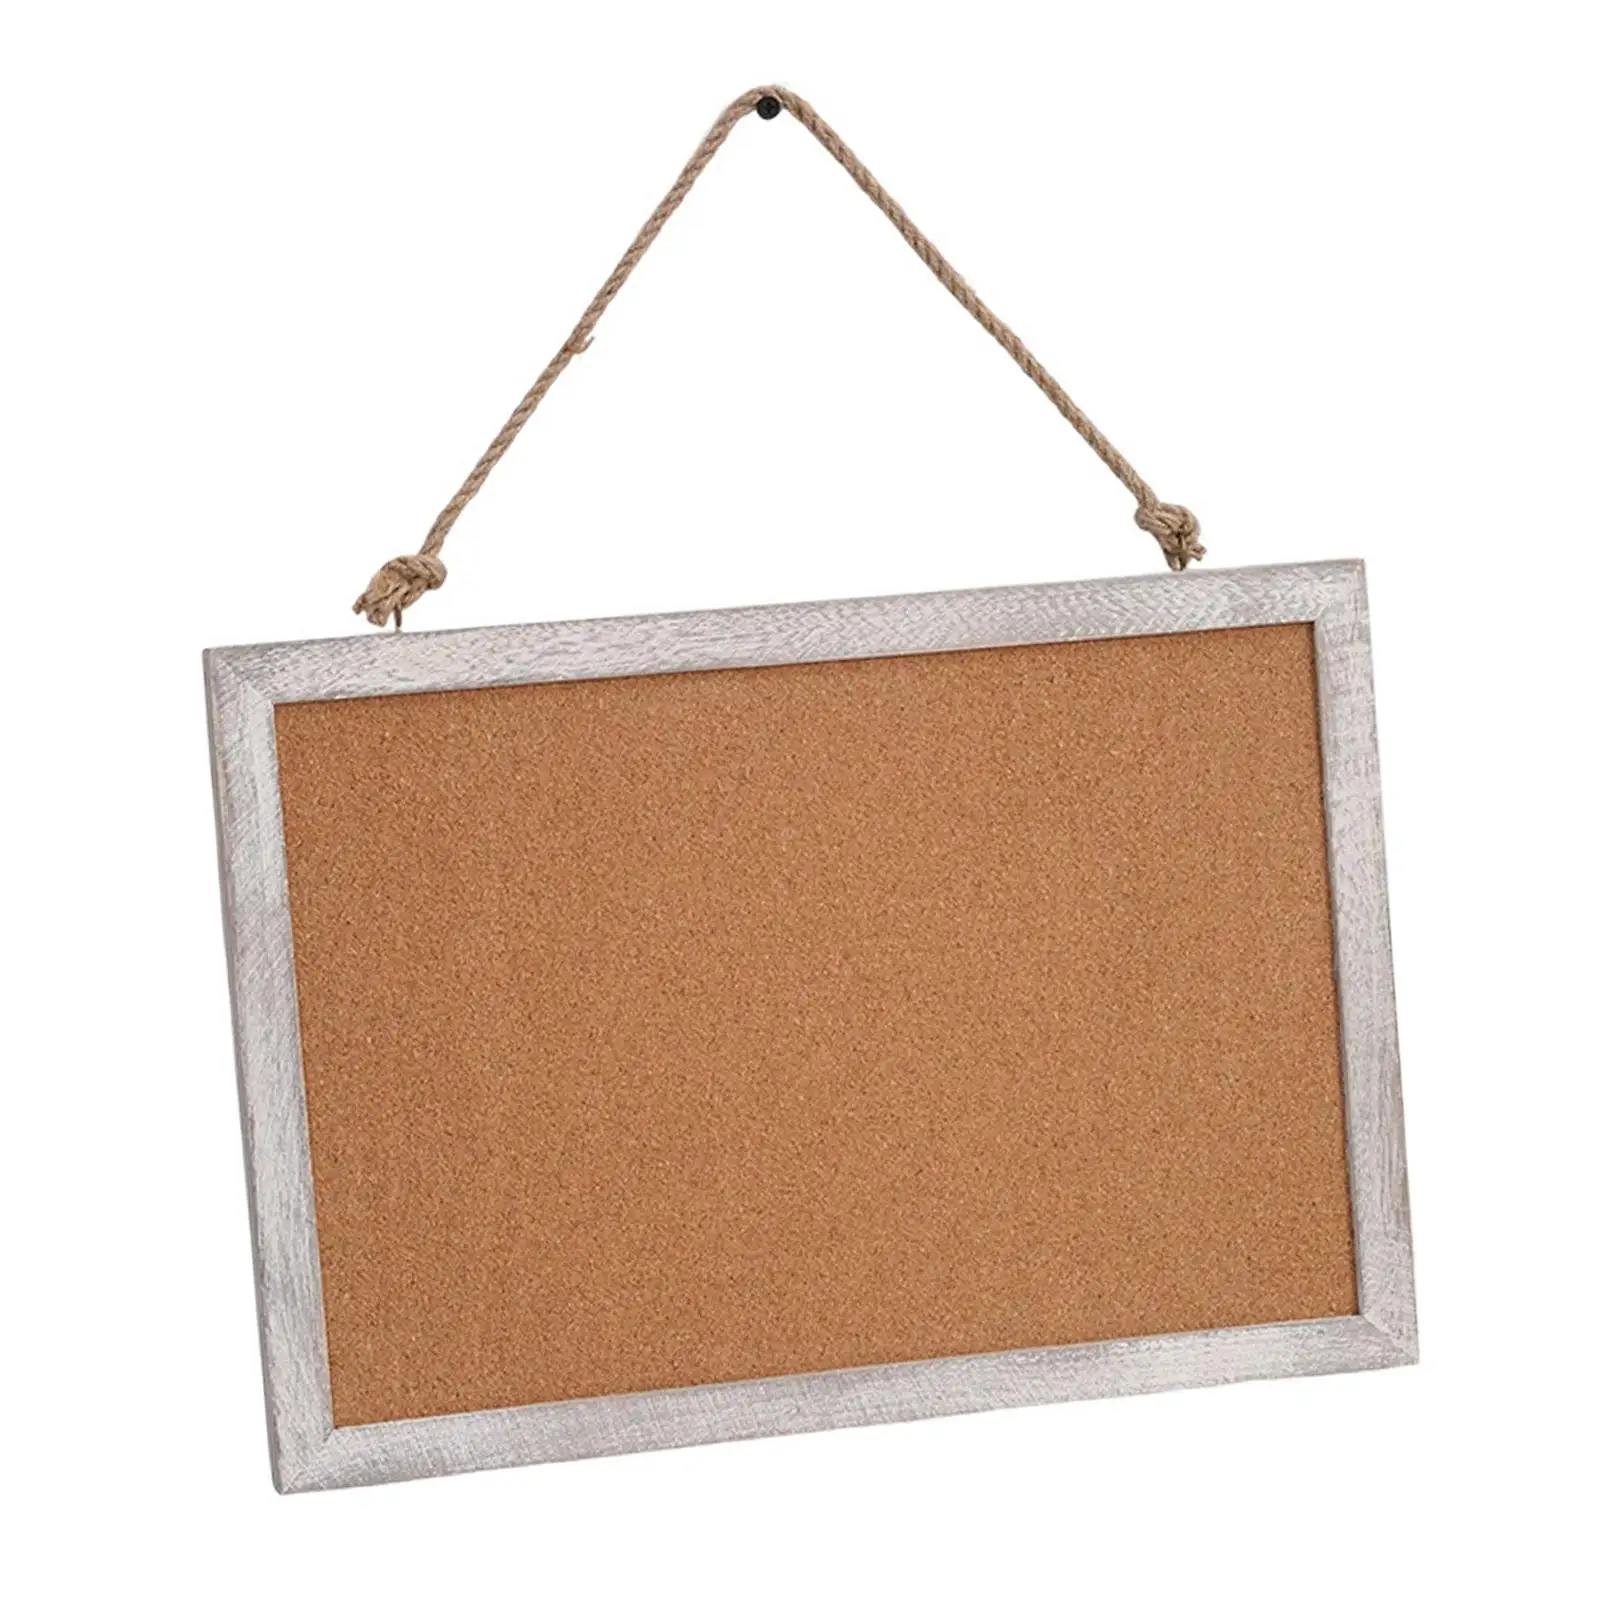 Hanging Cork Board Multifunctional Pin Tack Board for Porch Locker Fridge